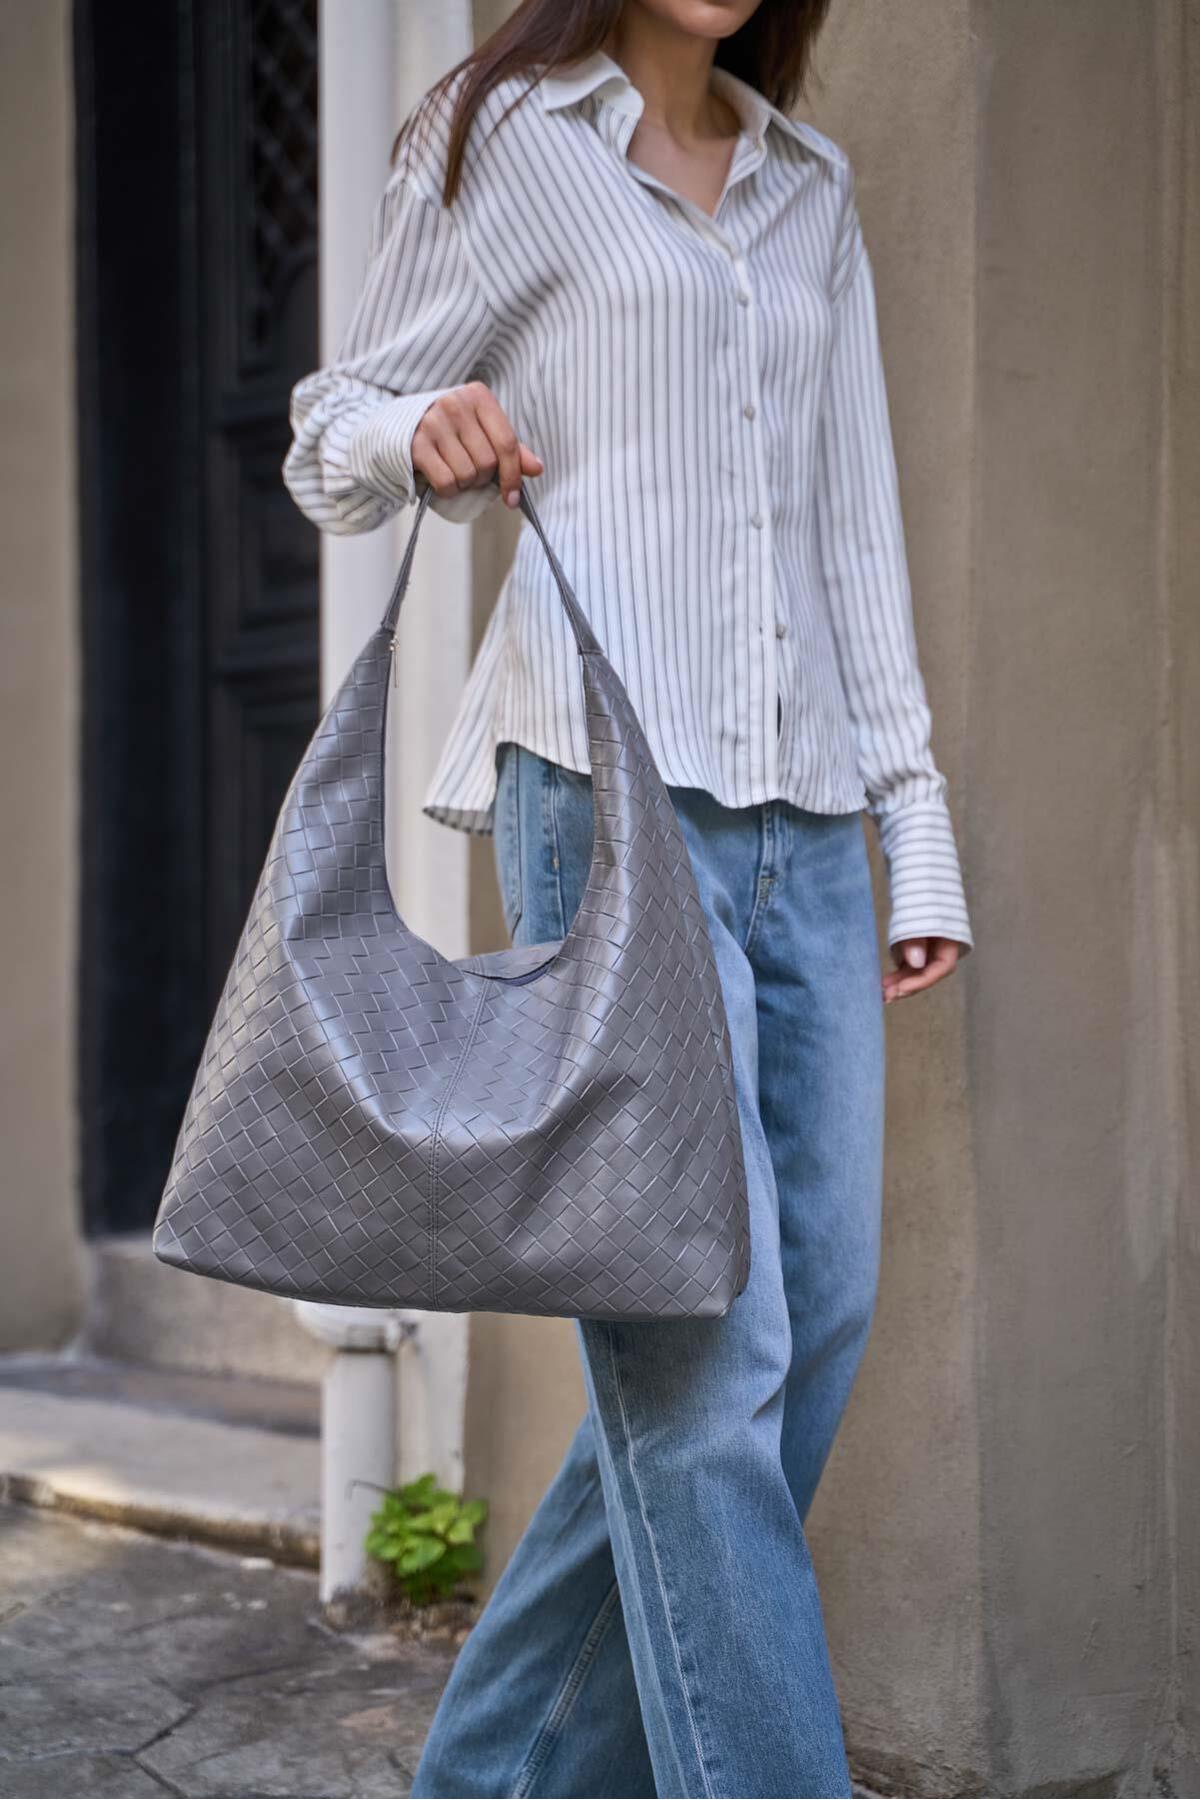 Madamra Gray Women's Knitted Patterned Leather Shoulder Bag